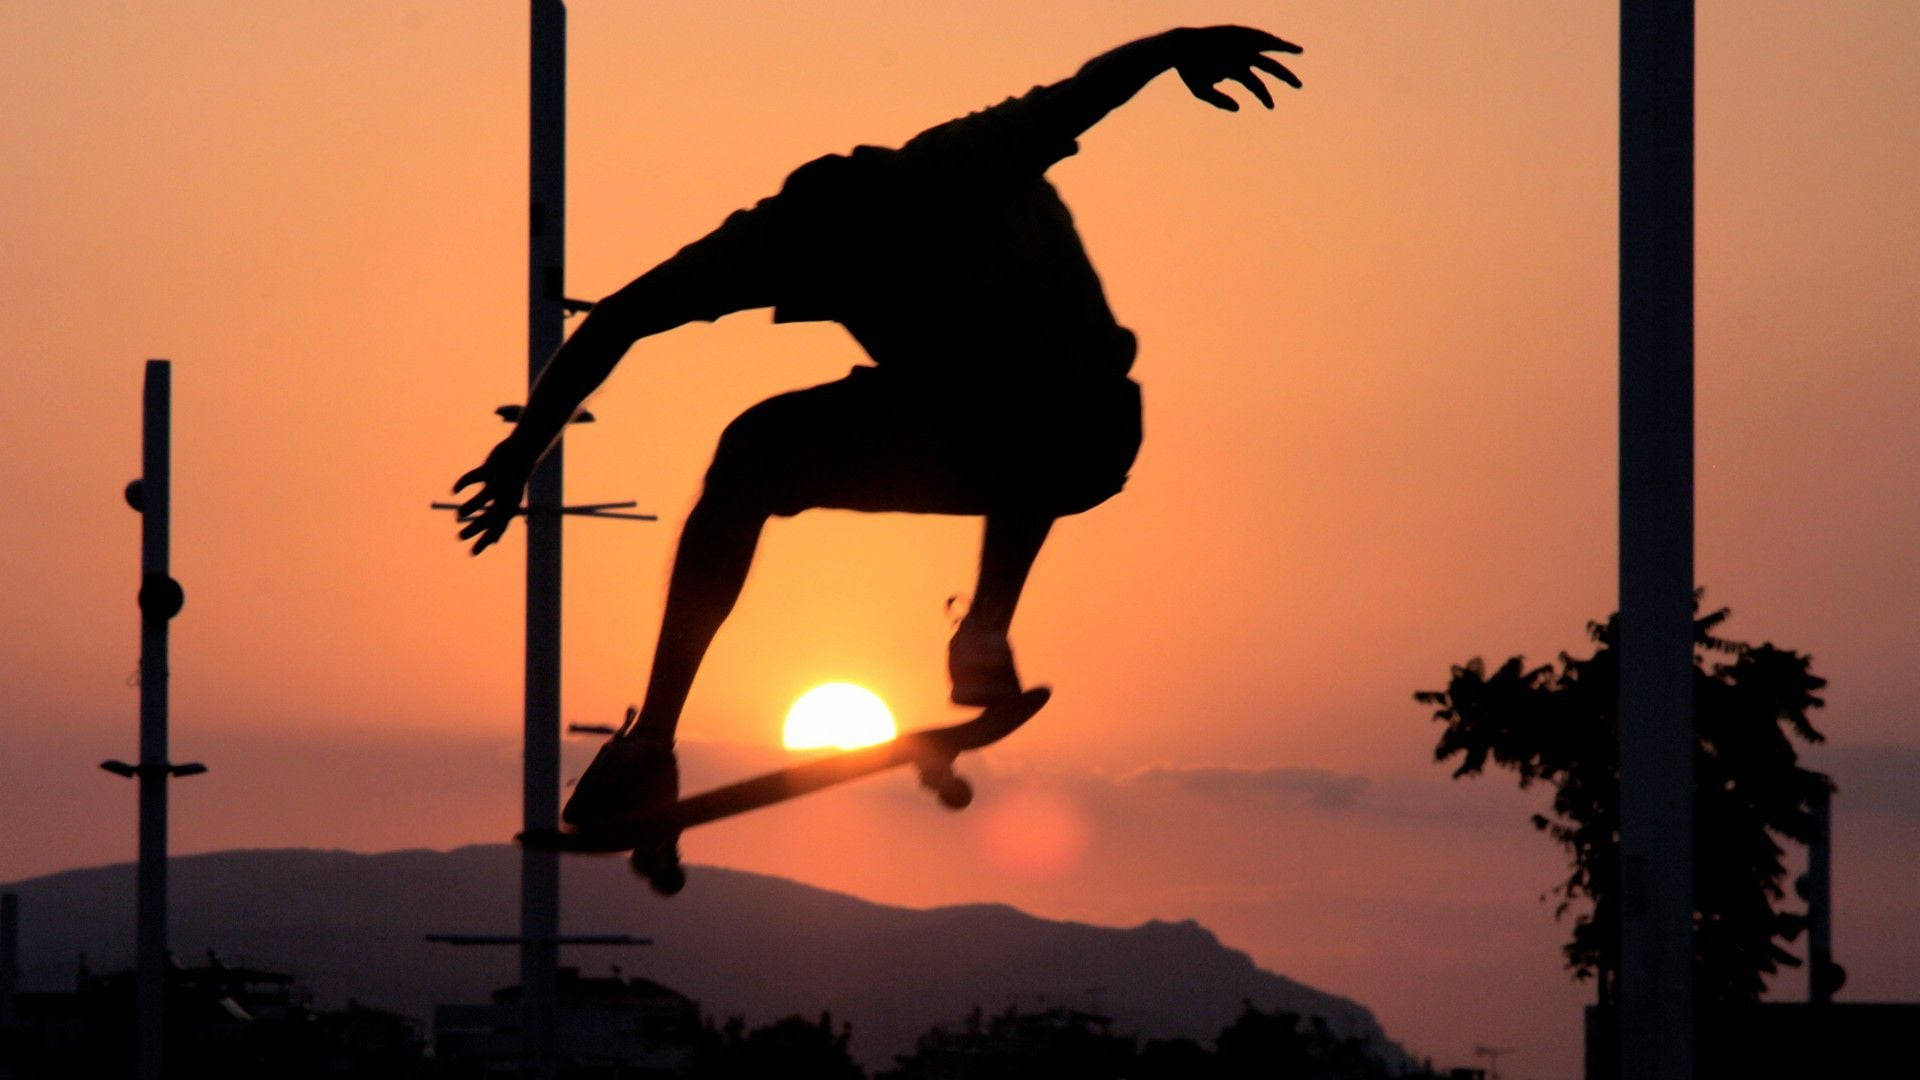 Aesthetic Skater Boy With Sunset